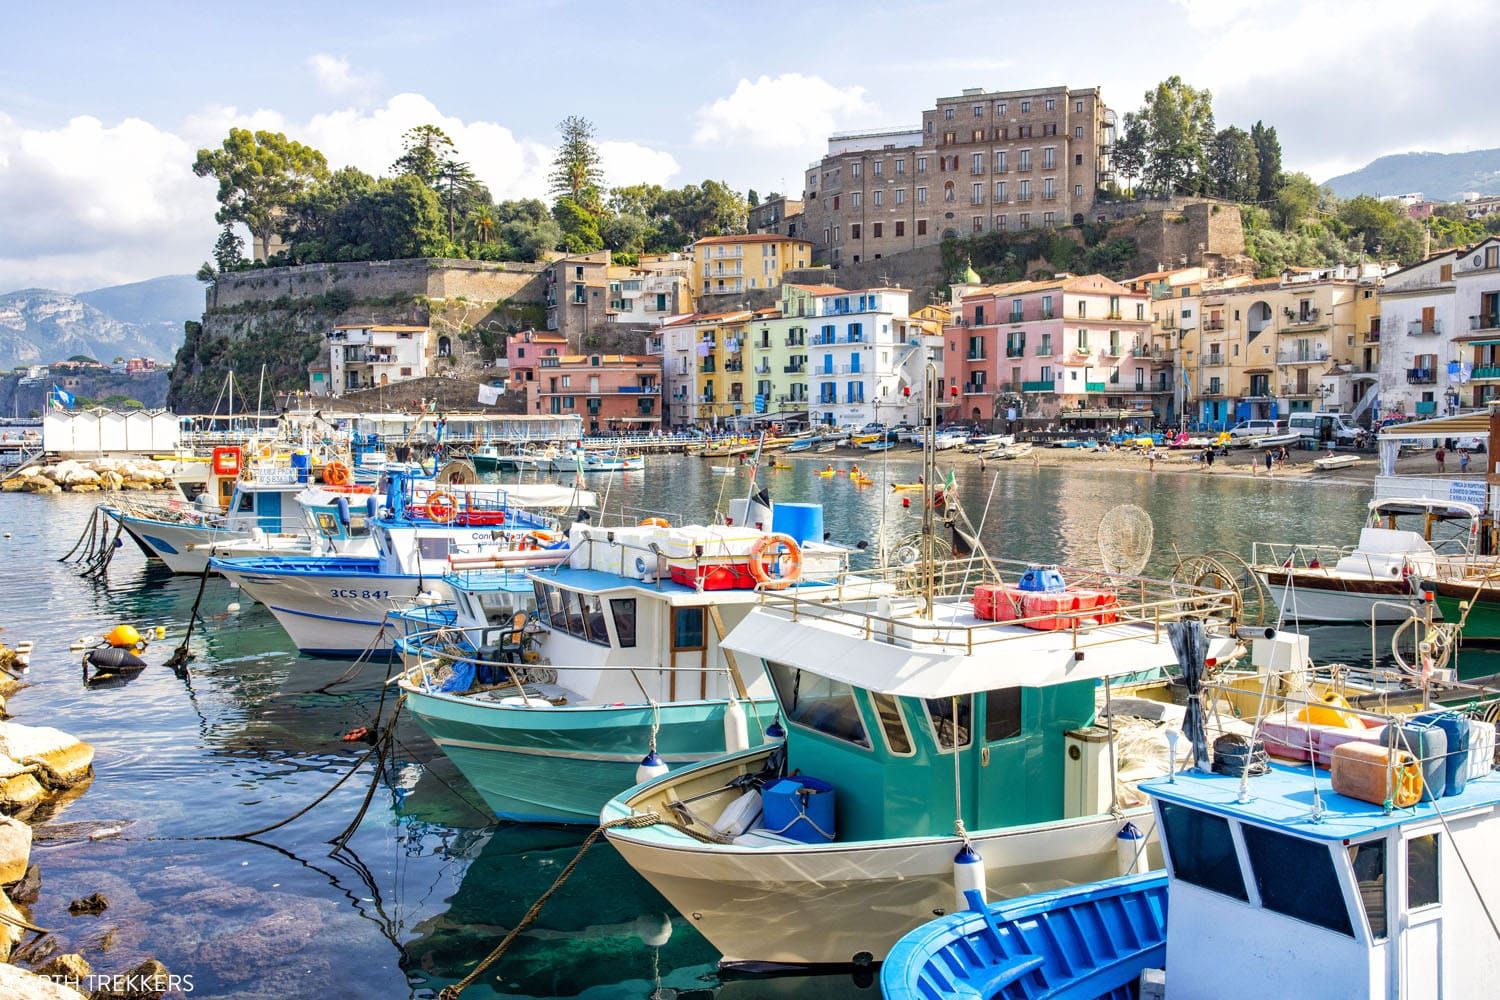 Marina Grande Sorrento | Where to Stay on the Amalfi Coast